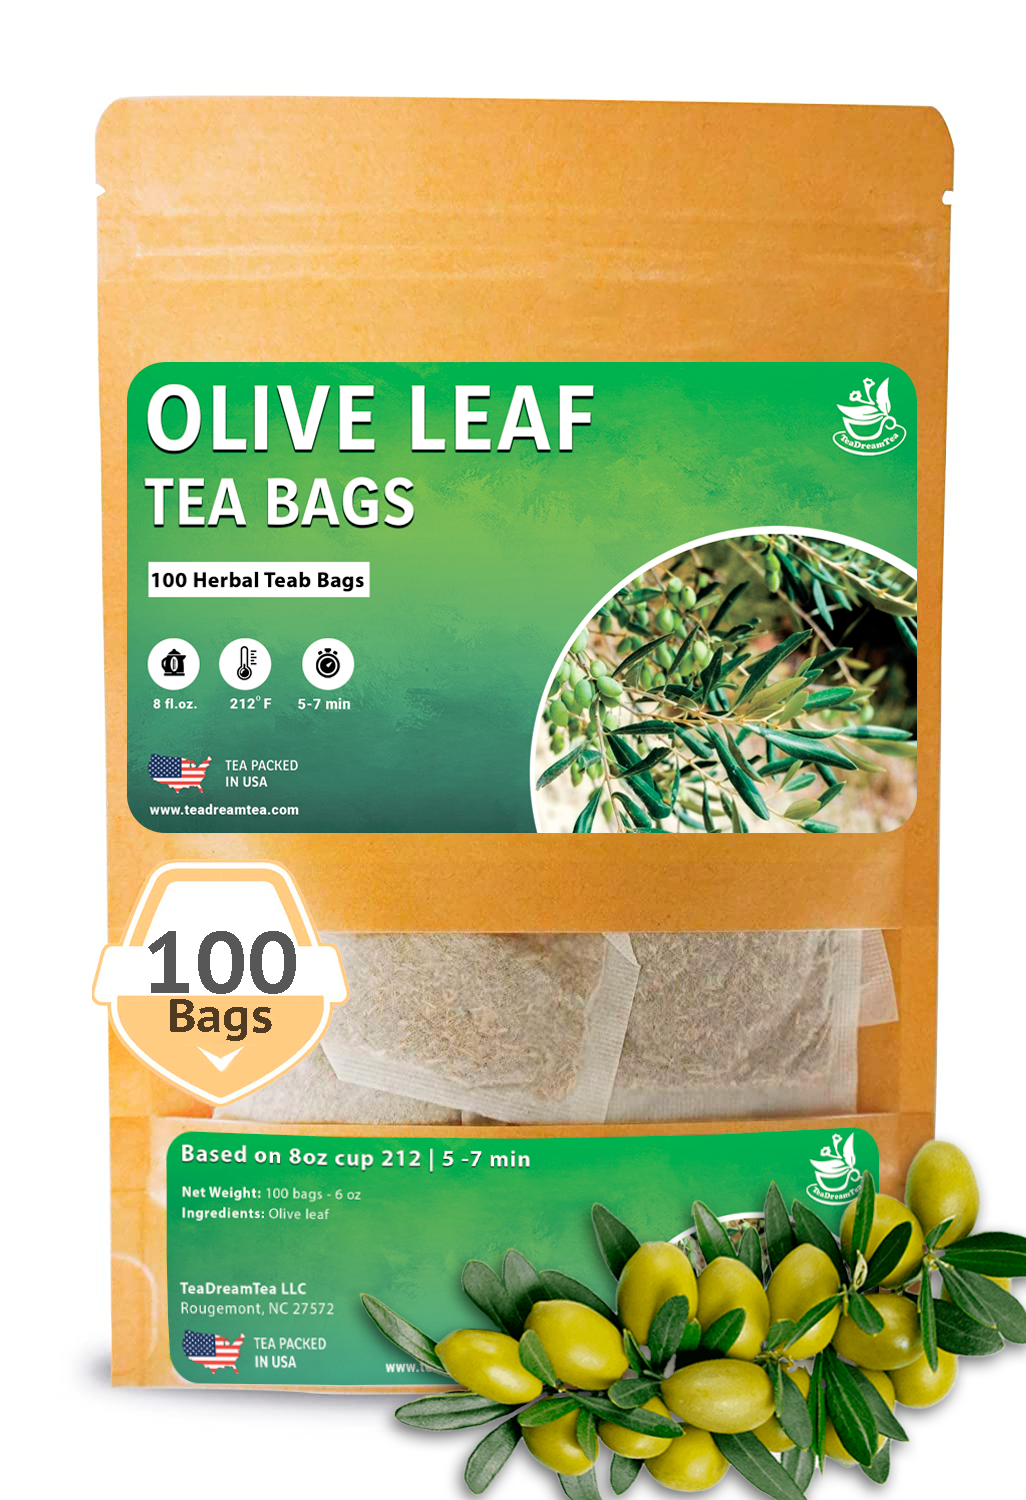 Olive Leaf Tea Bags - Size 50, 100 and 200 bags - TeaDreamTea